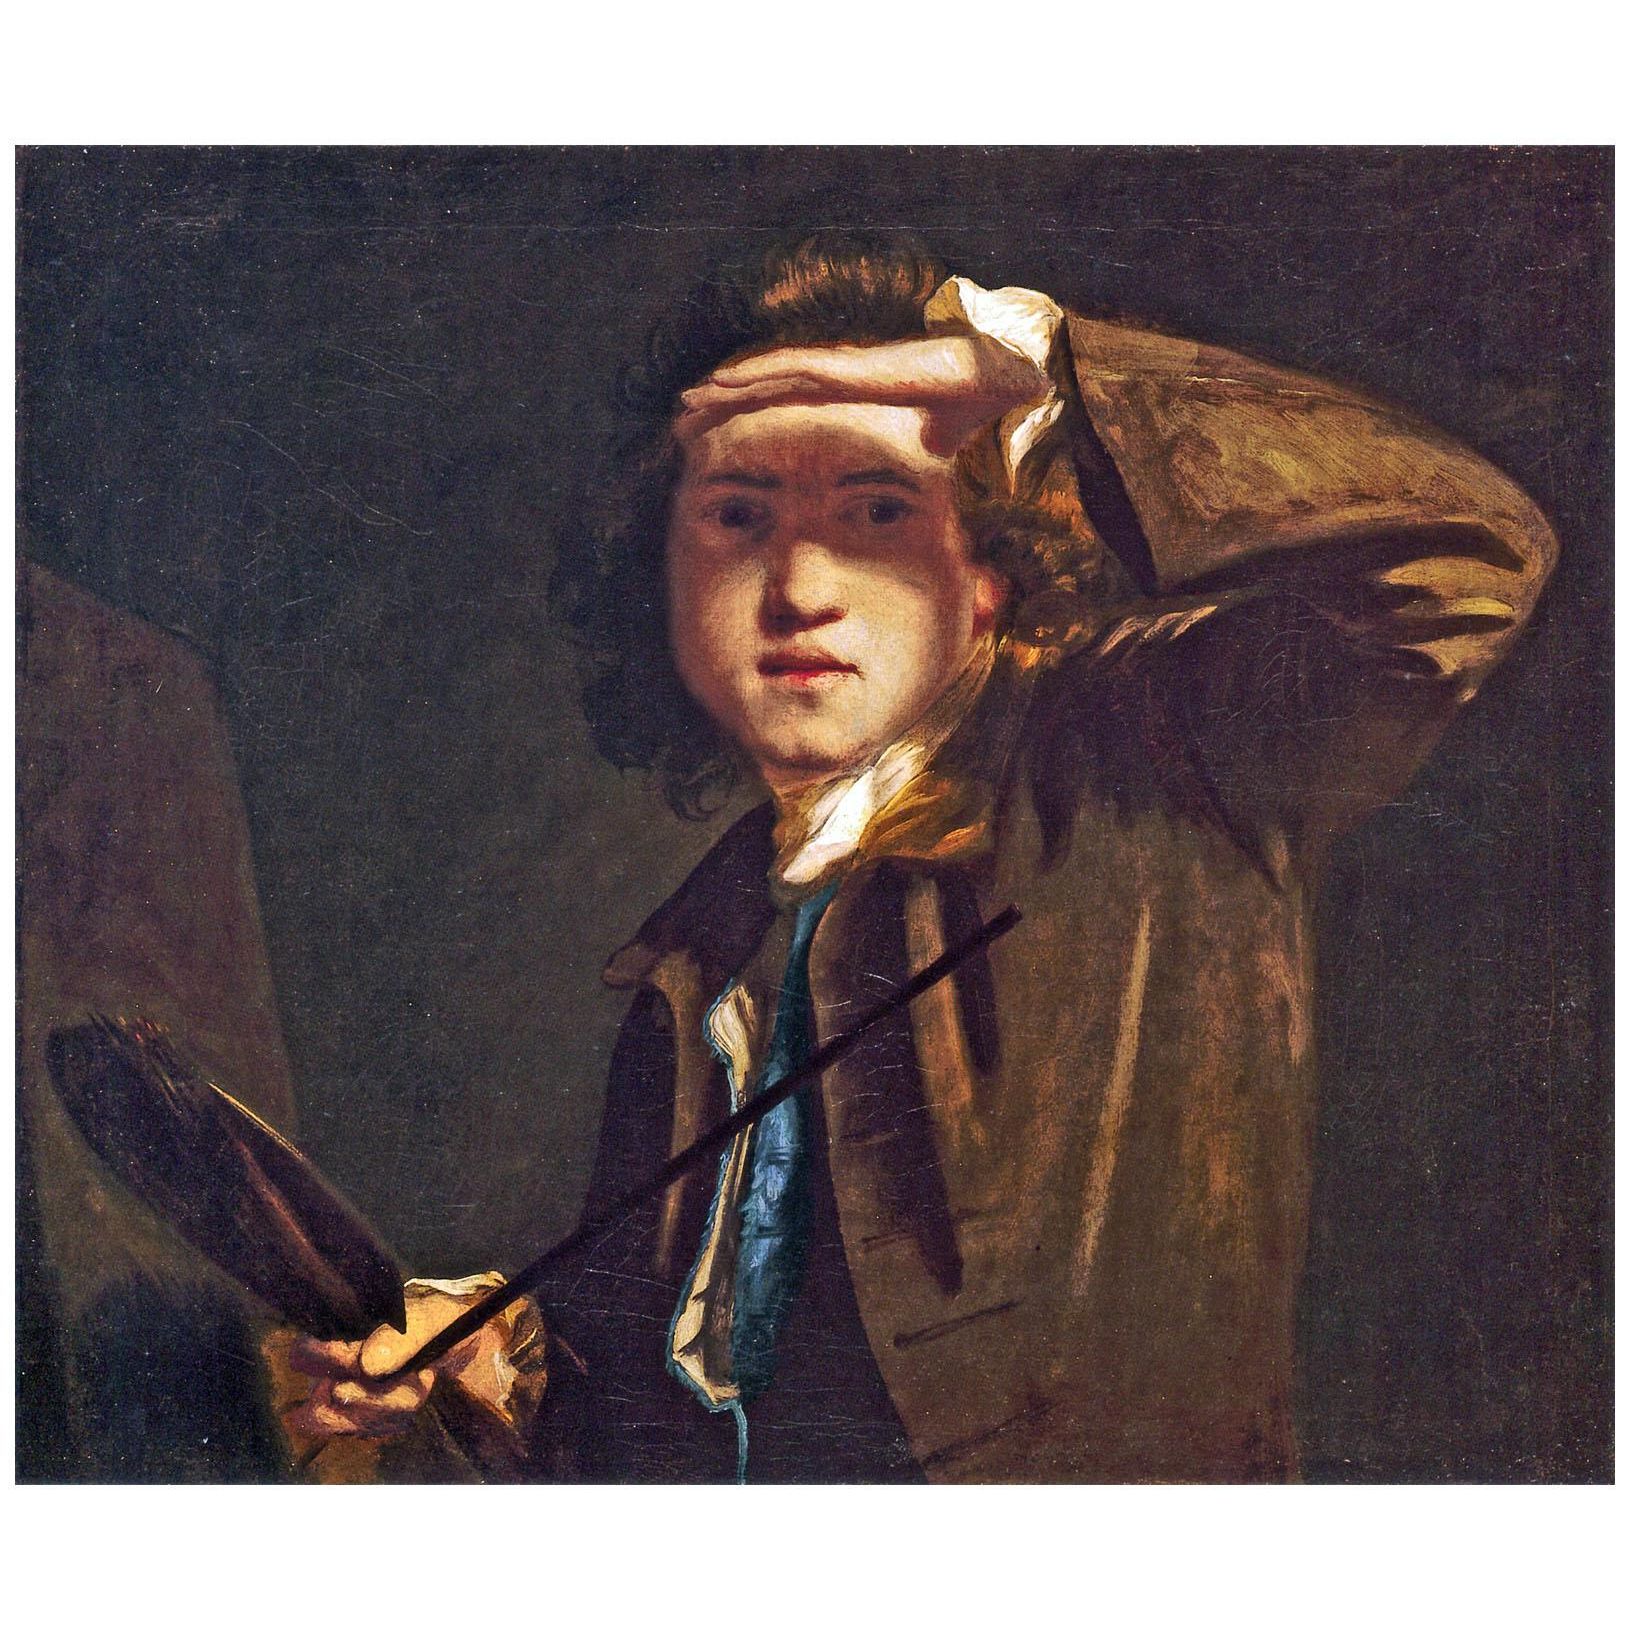 Joshua Reynolds. Self-Portrait. 1748. NPG London